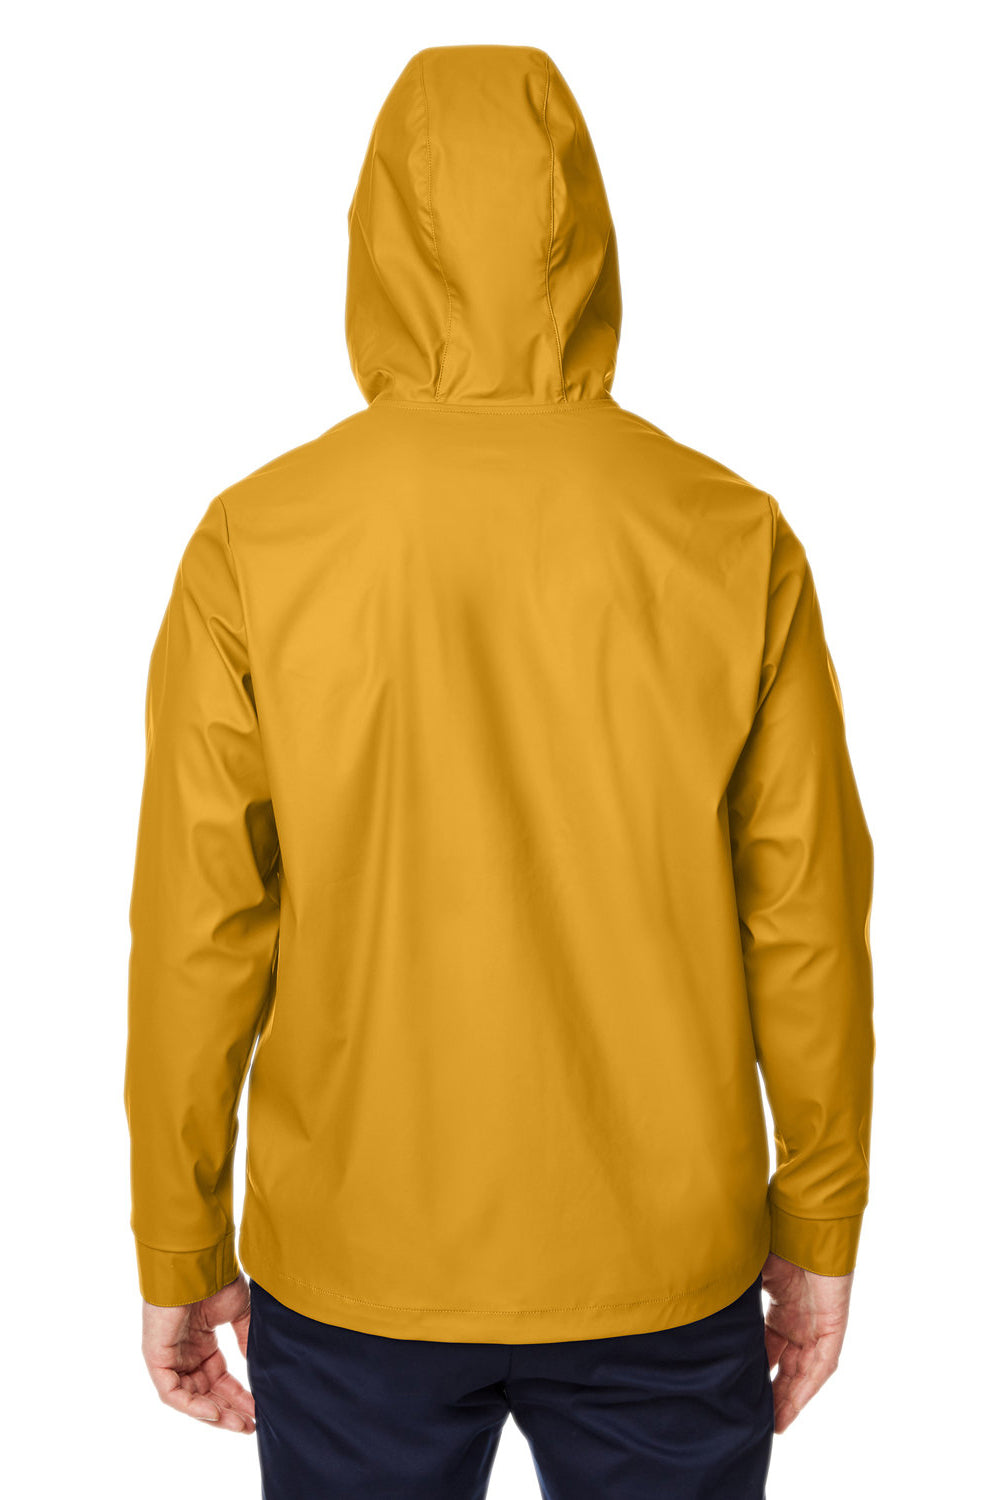 Devon & Jones DG720 Mens New Classics Prescott Full Zip Hooded Rain Jacket Prescott Yellow Back